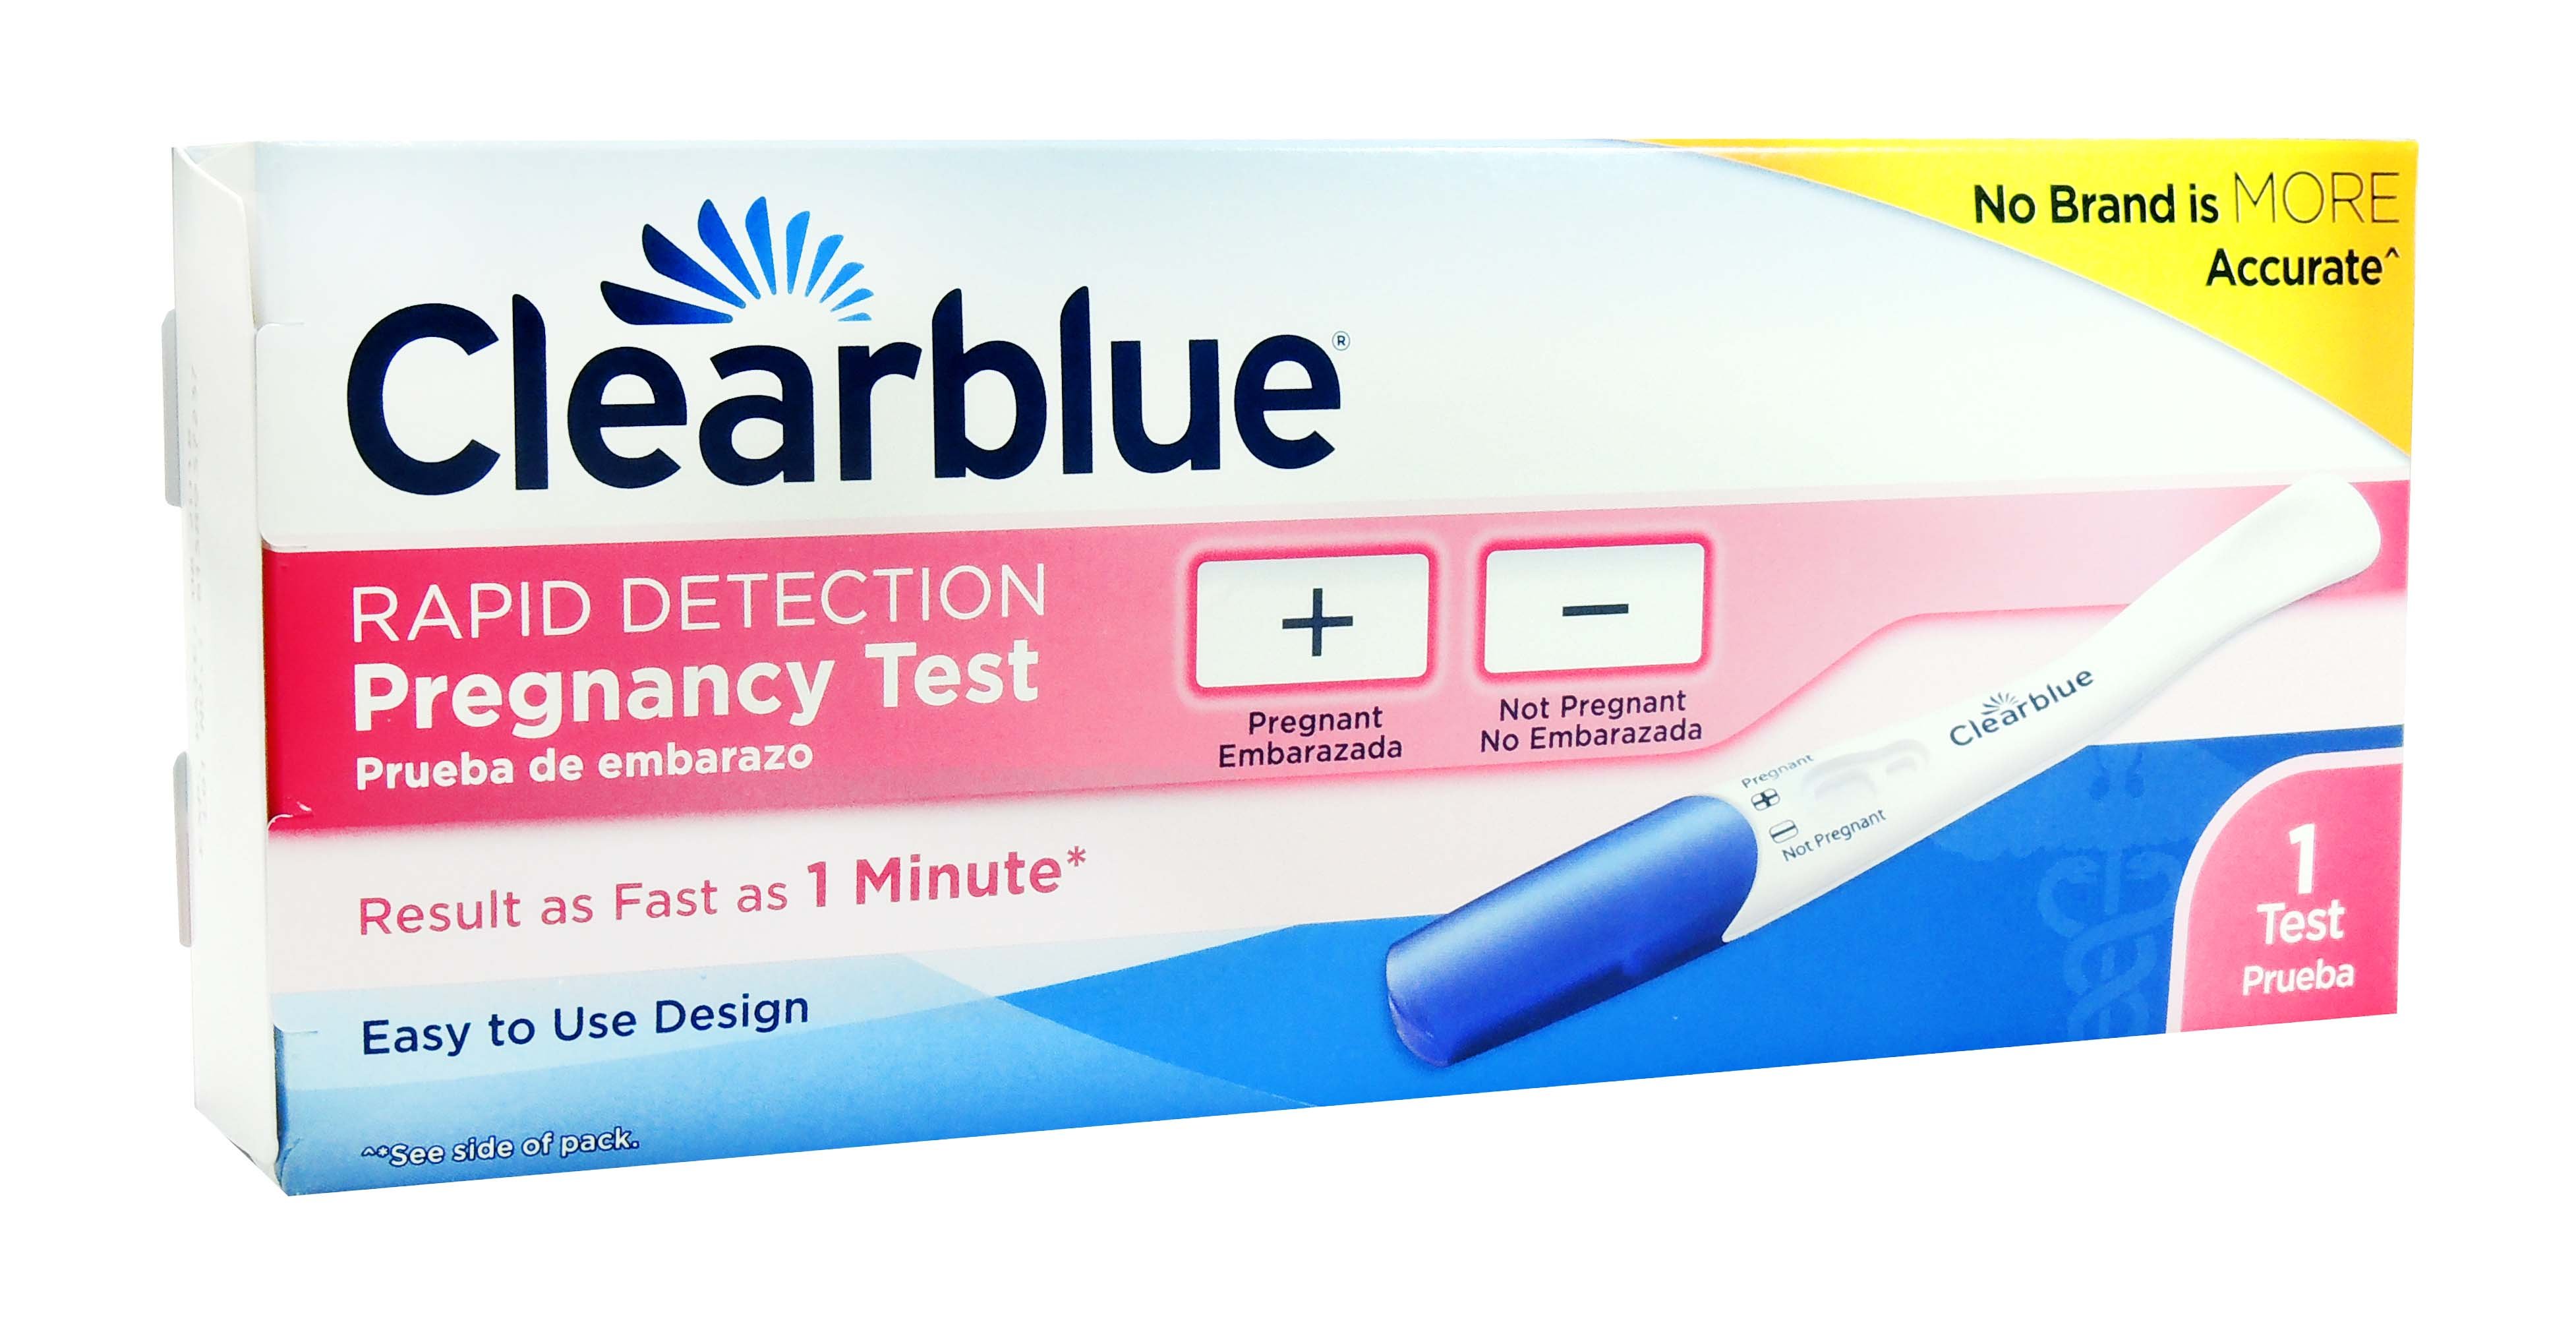 Тесты clearblue форум. Тест клиаблу (Clearblue). Струйный тест. Струйный тест на беременность. Струйный электронный тест на беременность.